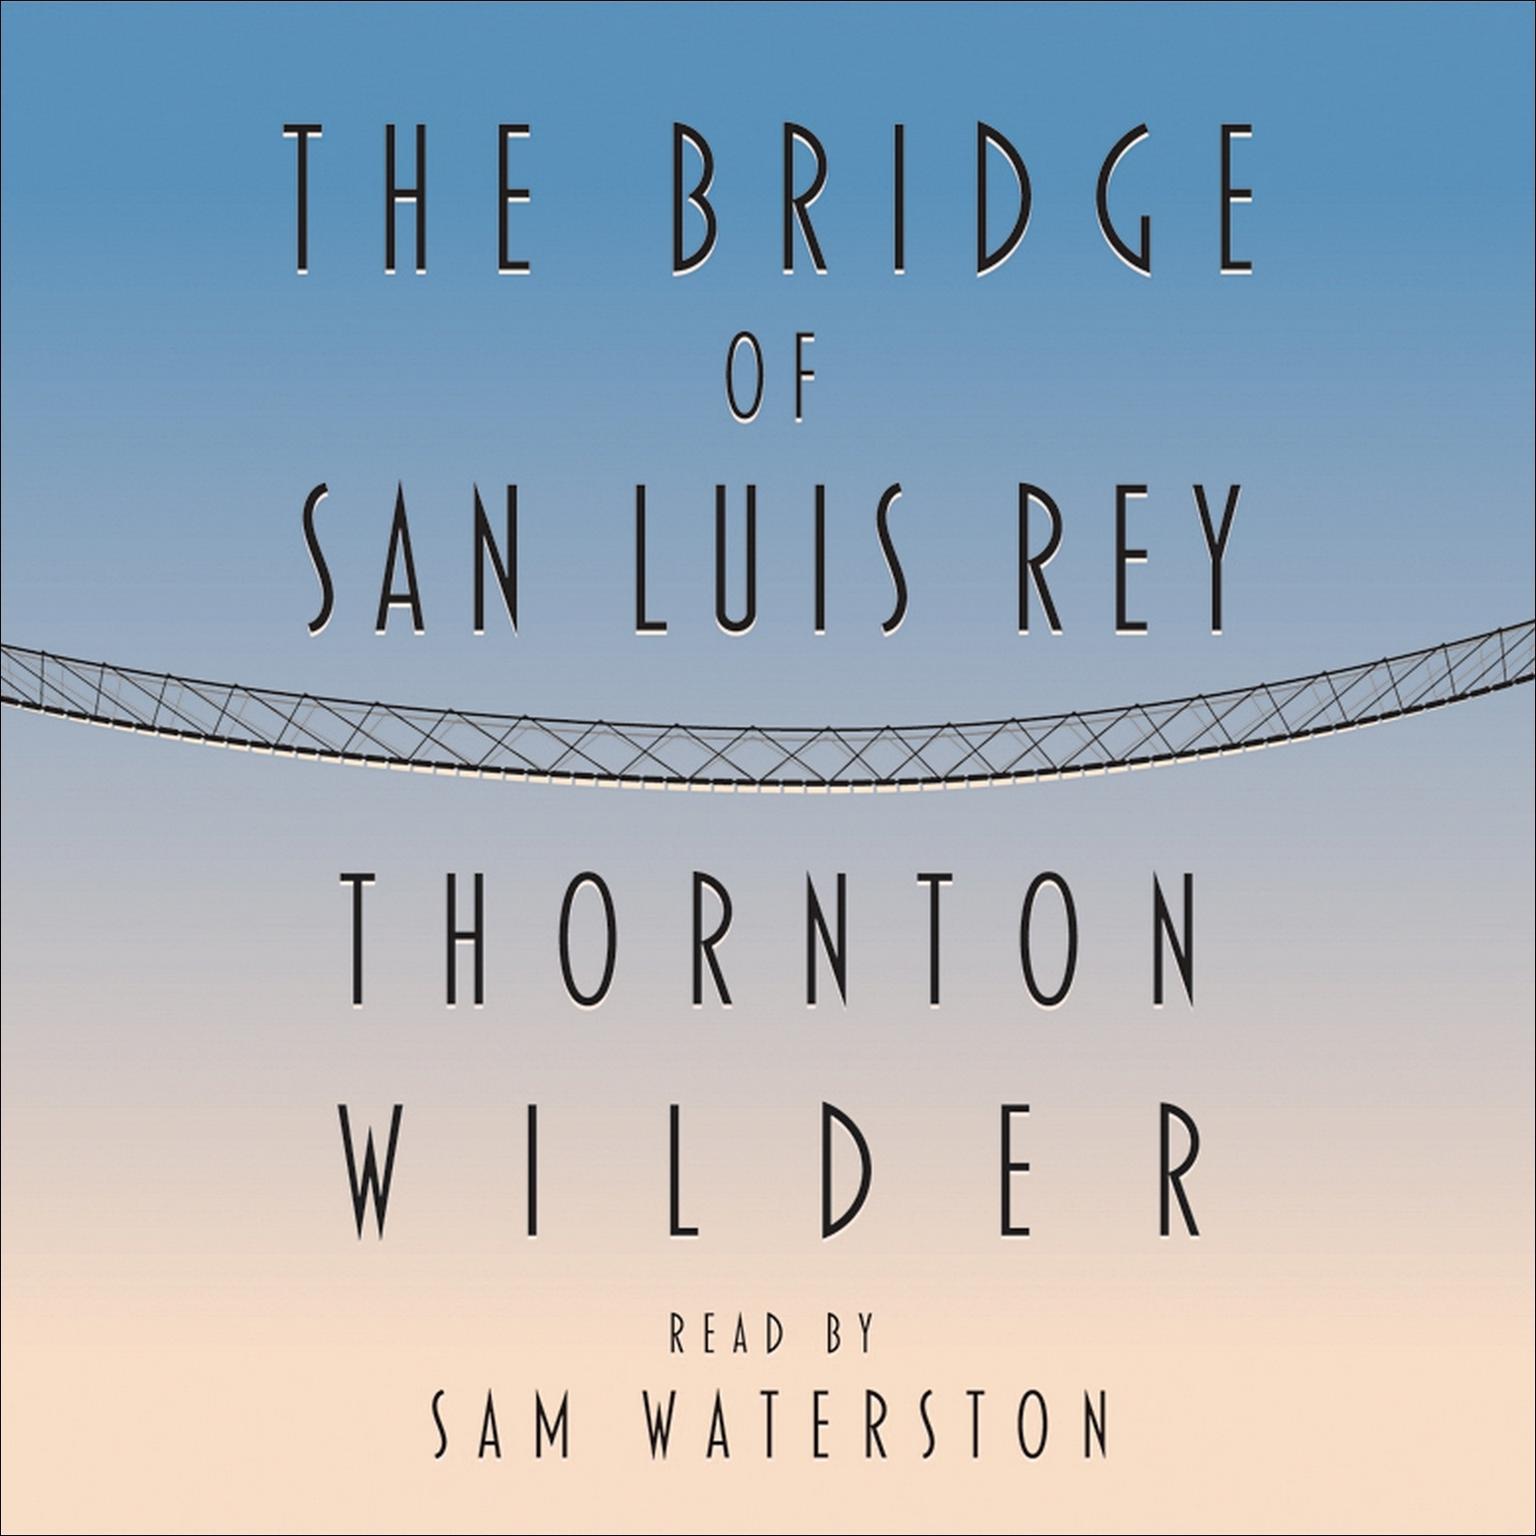 The Bridge of San Luis Rey Audiobook, by Thornton Wilder